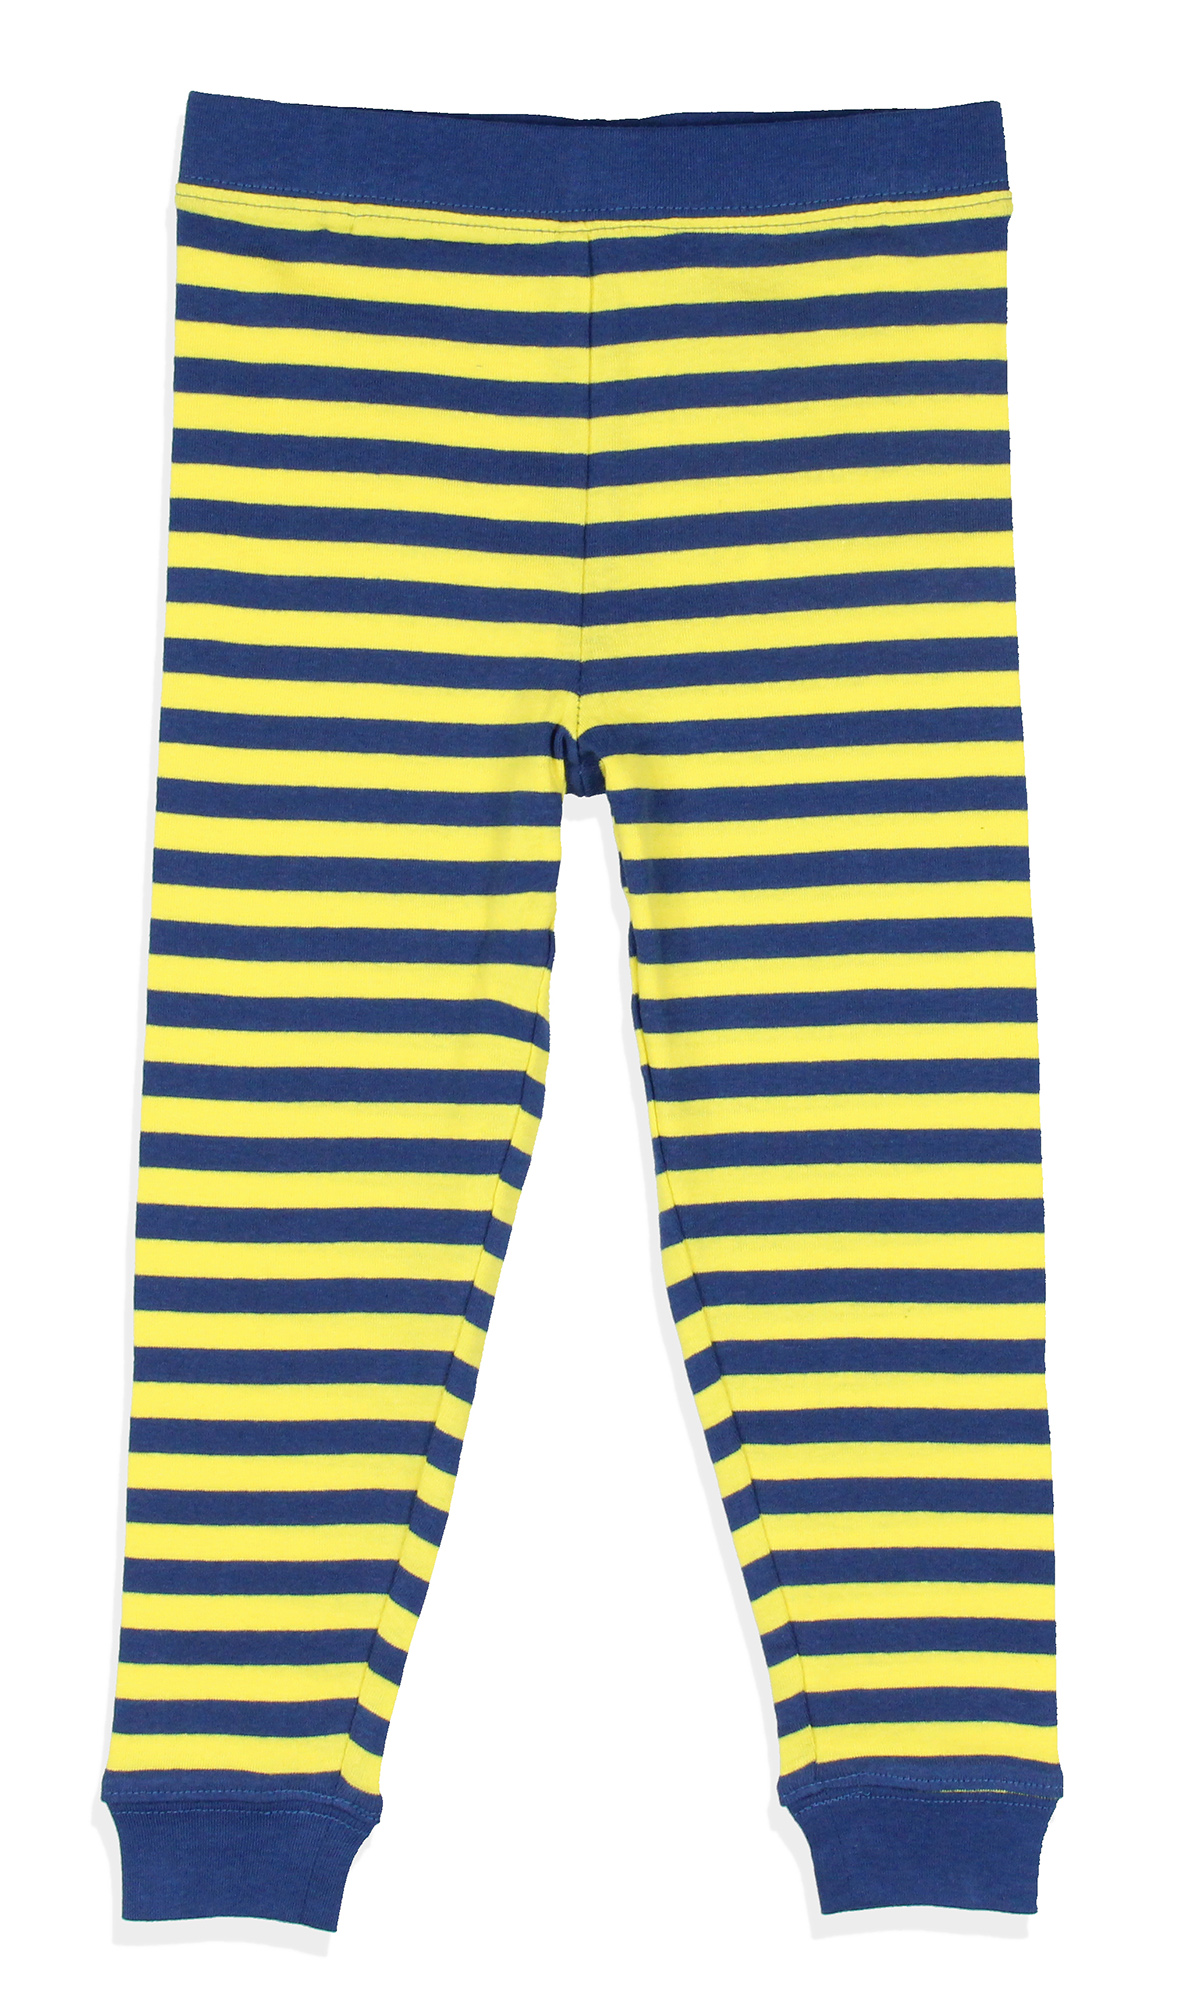 Intimo Curious George Toddler Boys' Tight Fit Character Banana Striped Sleep Pajama Set Long Sleeves Pants